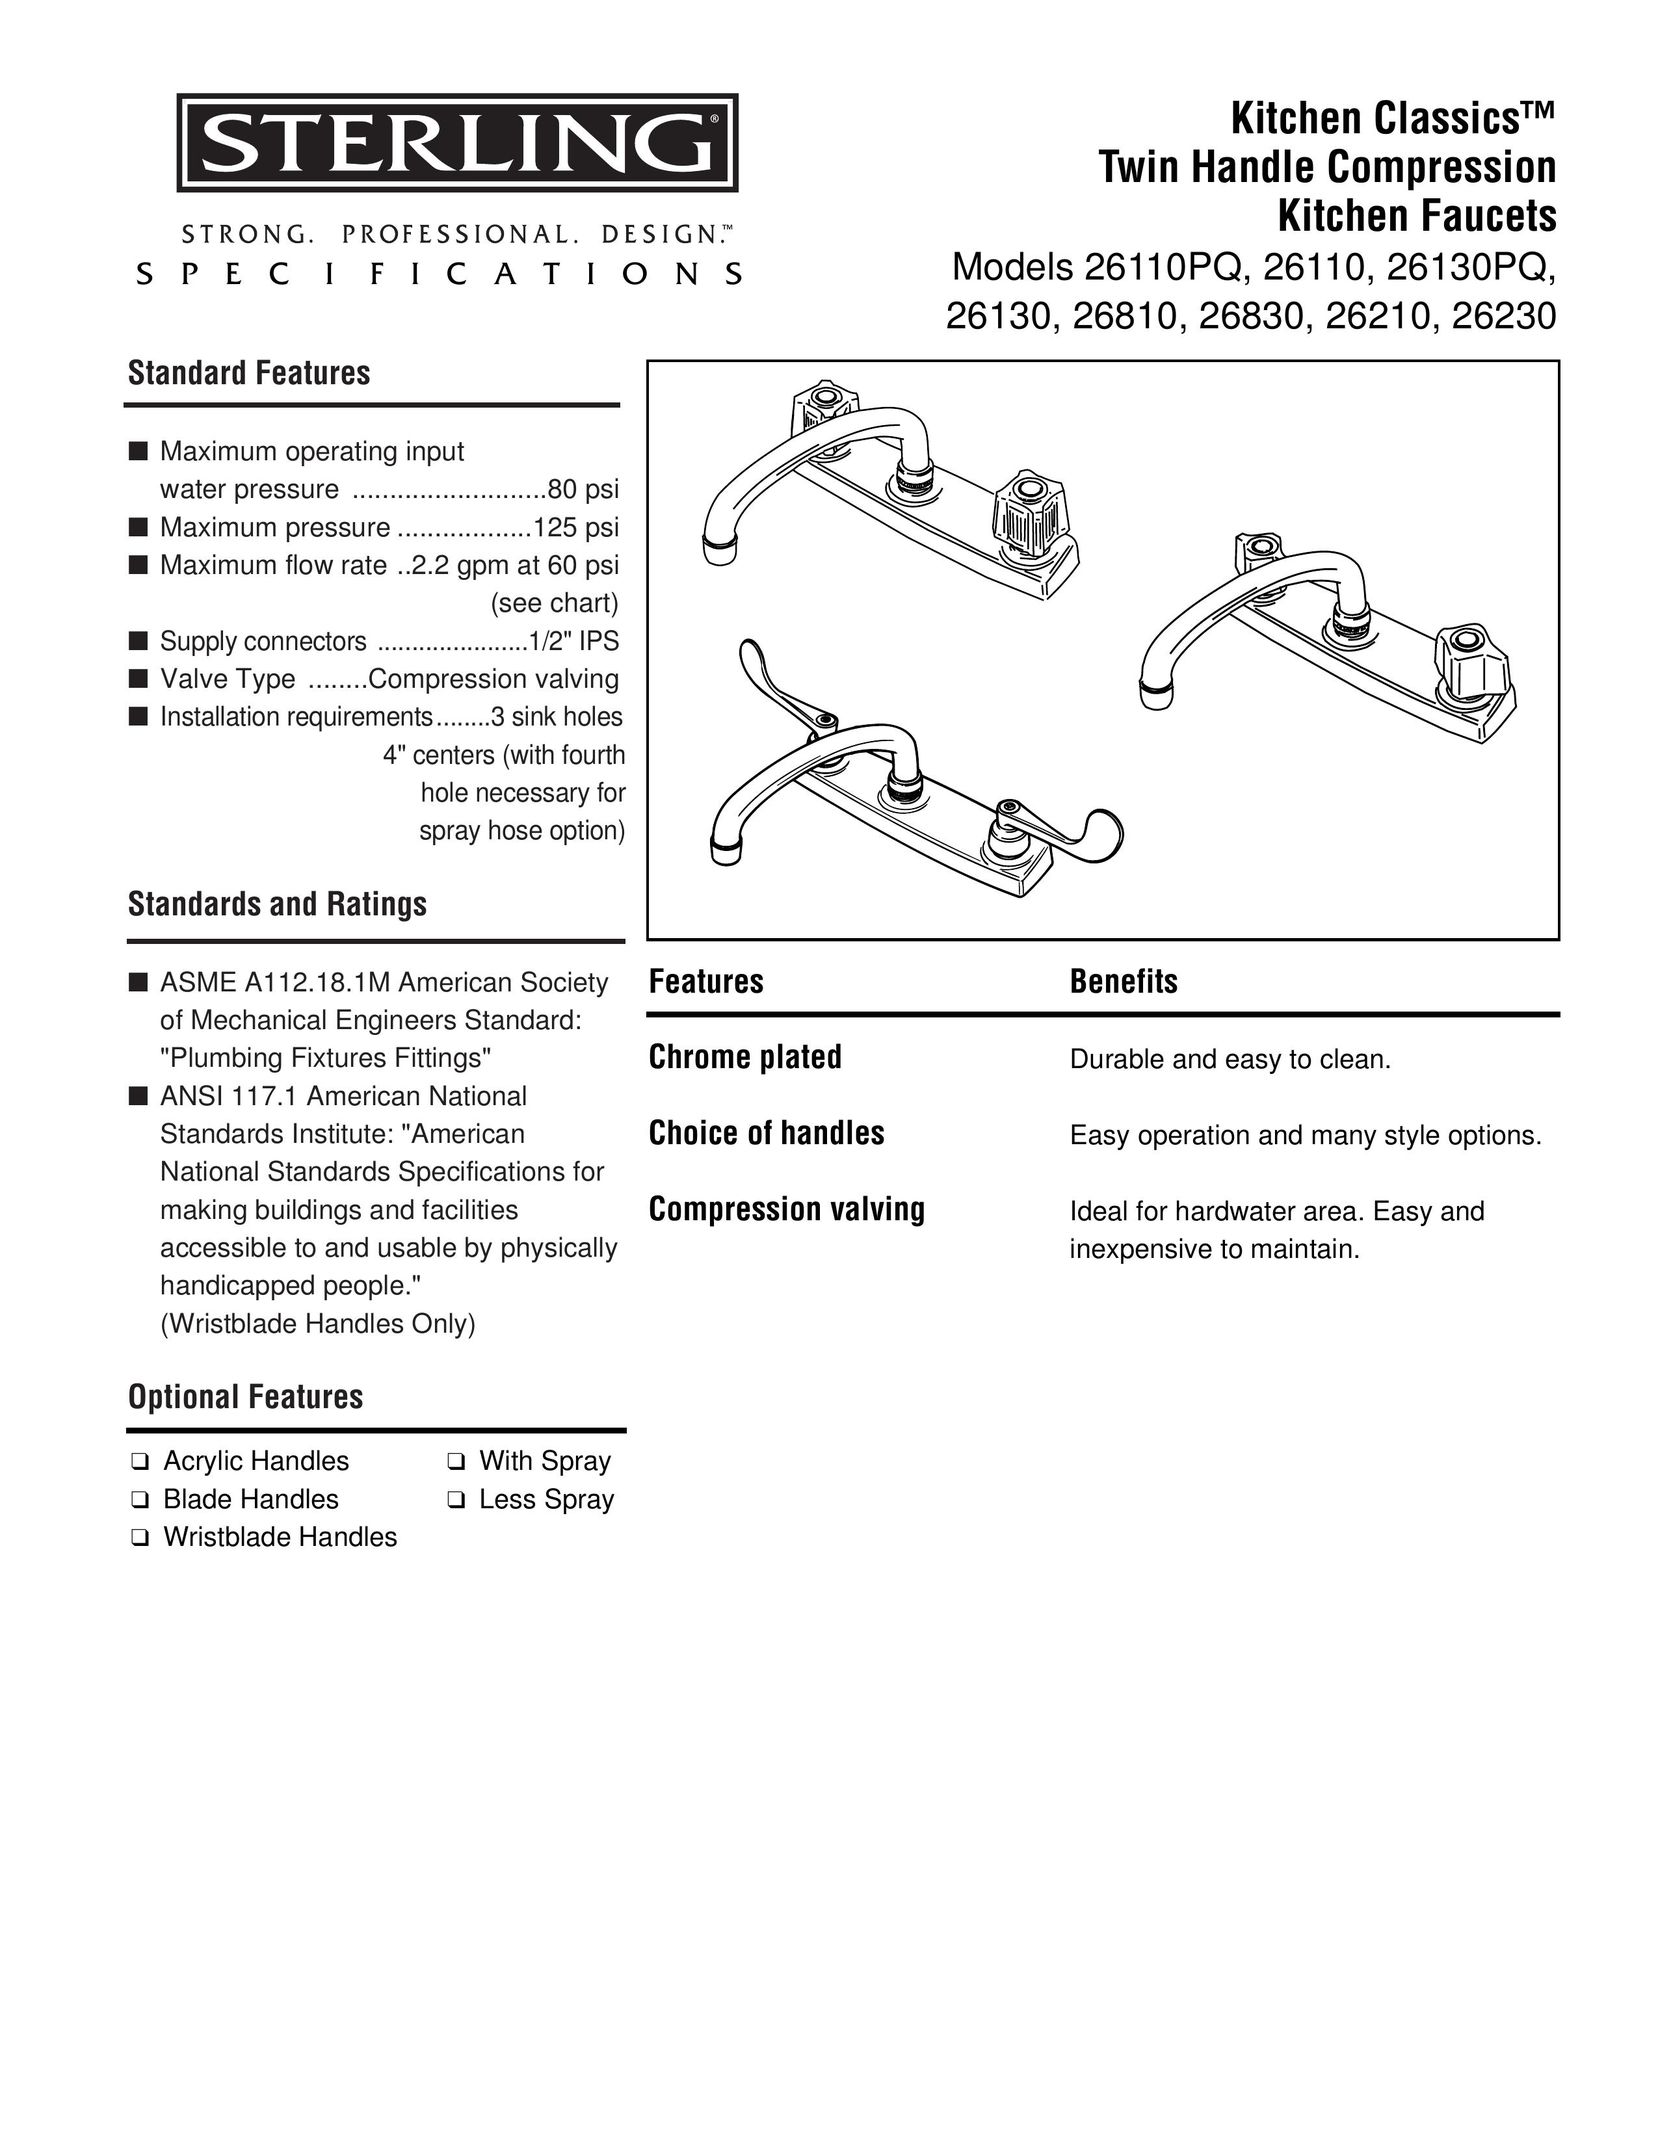 Sterling Plumbing 26830 Indoor Furnishings User Manual